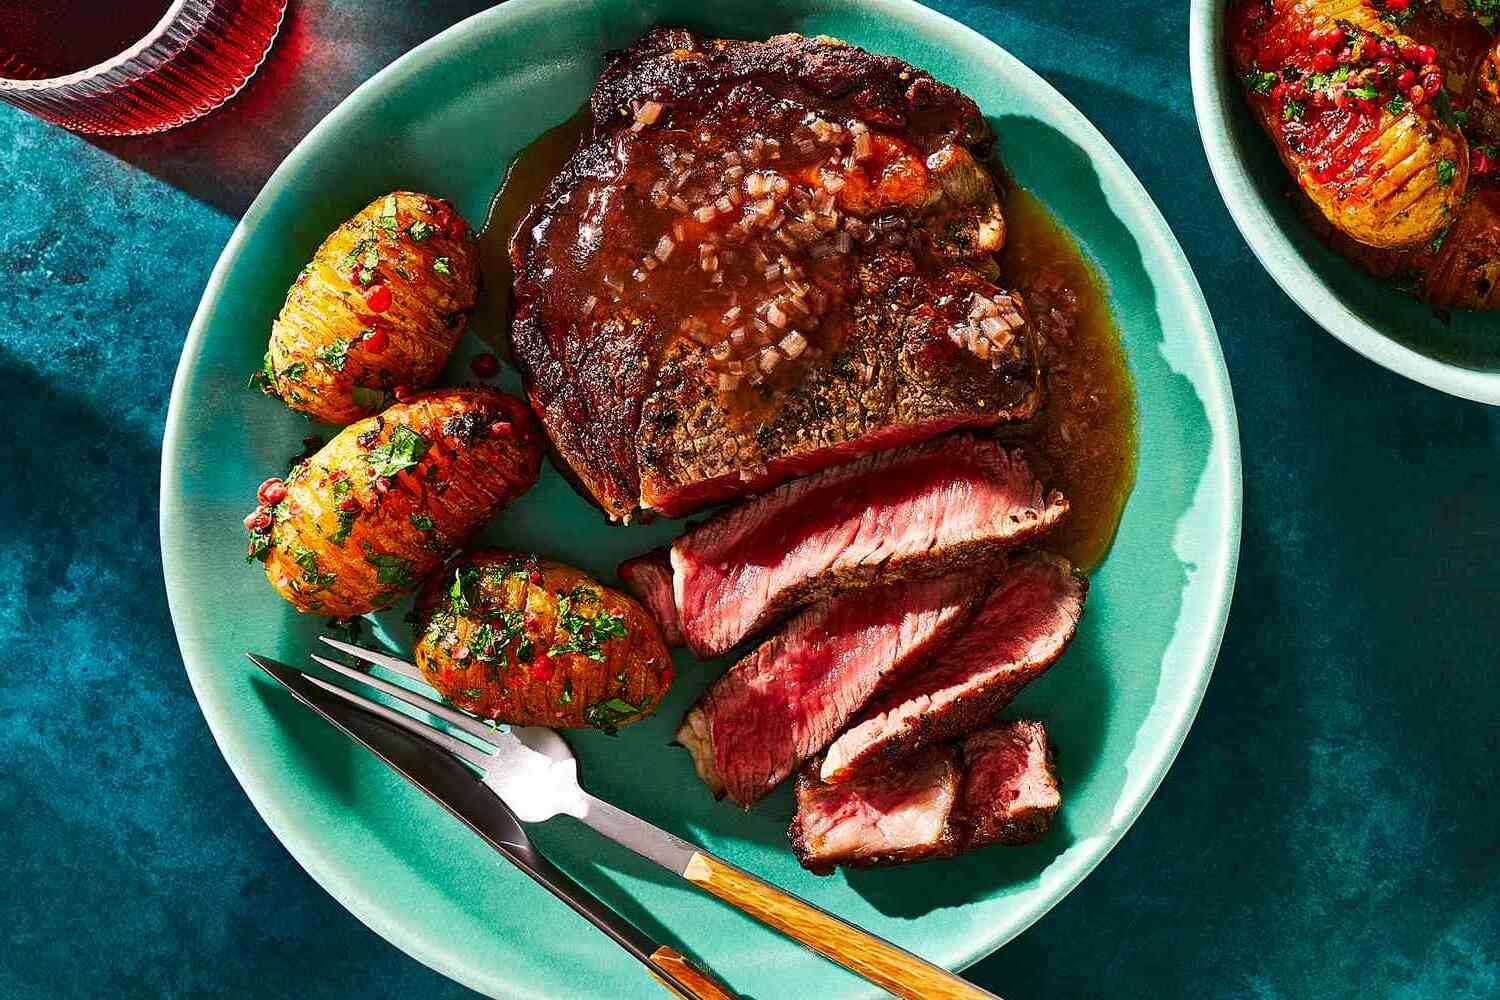 Peppercorn Crusted Steak with Re.jpg